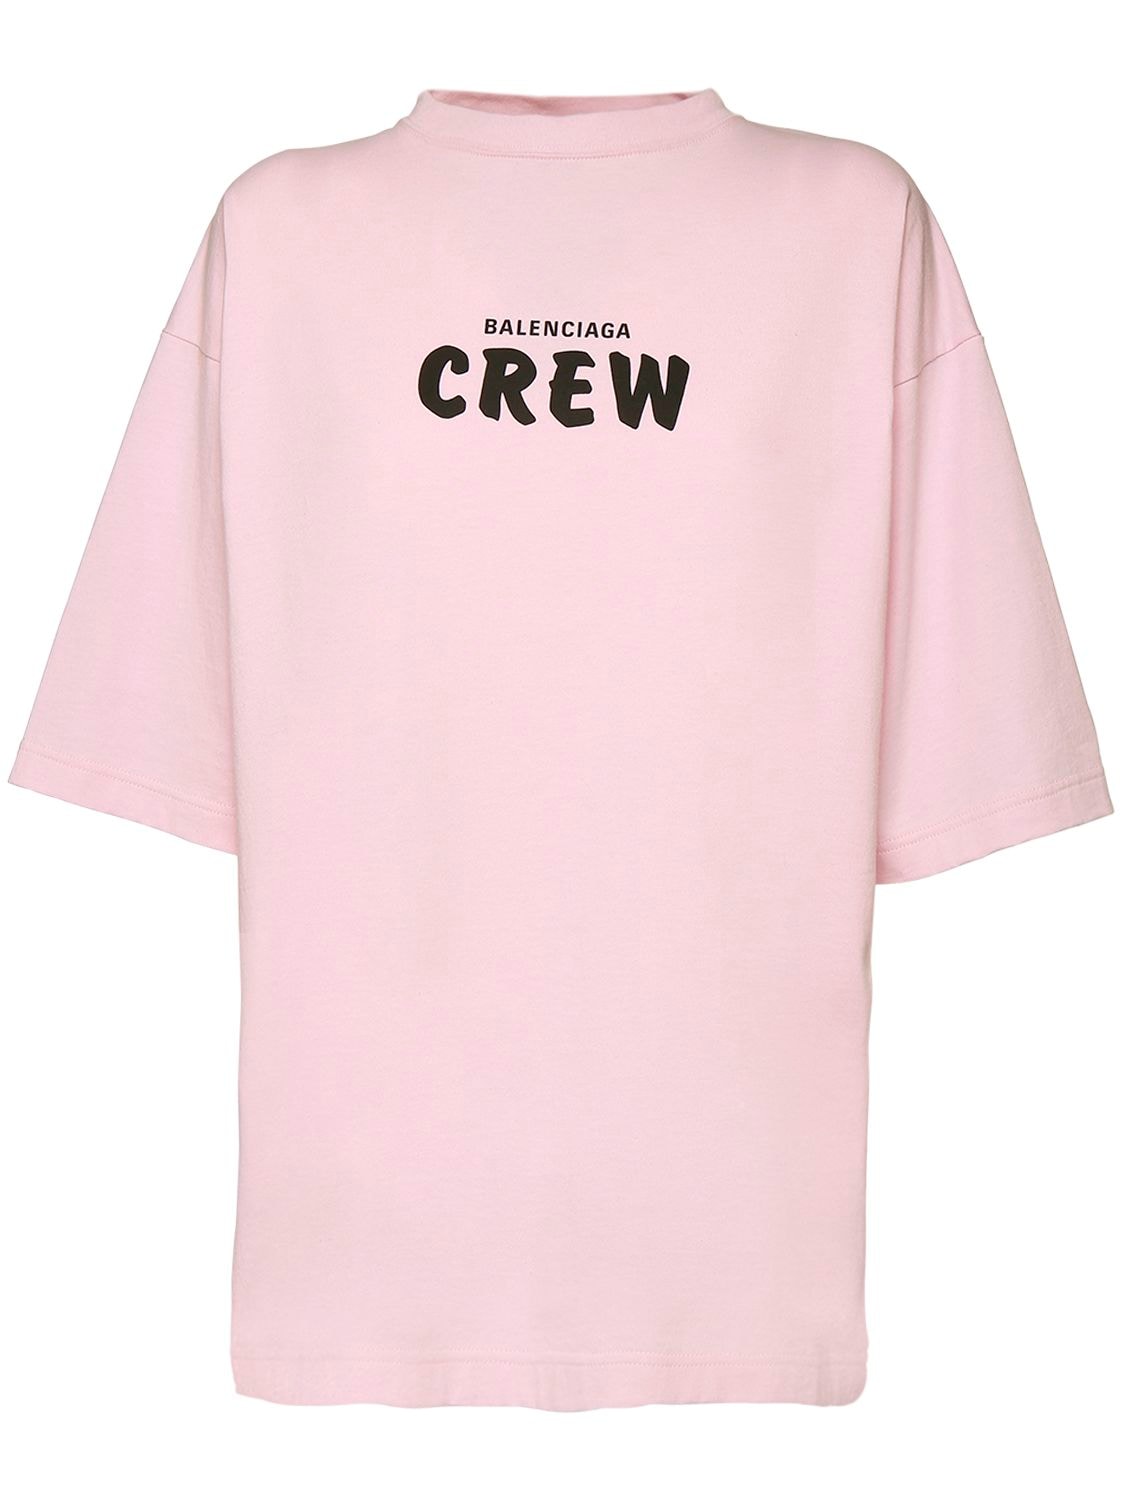 Over Crew Print Cotton Jersey T-shirt